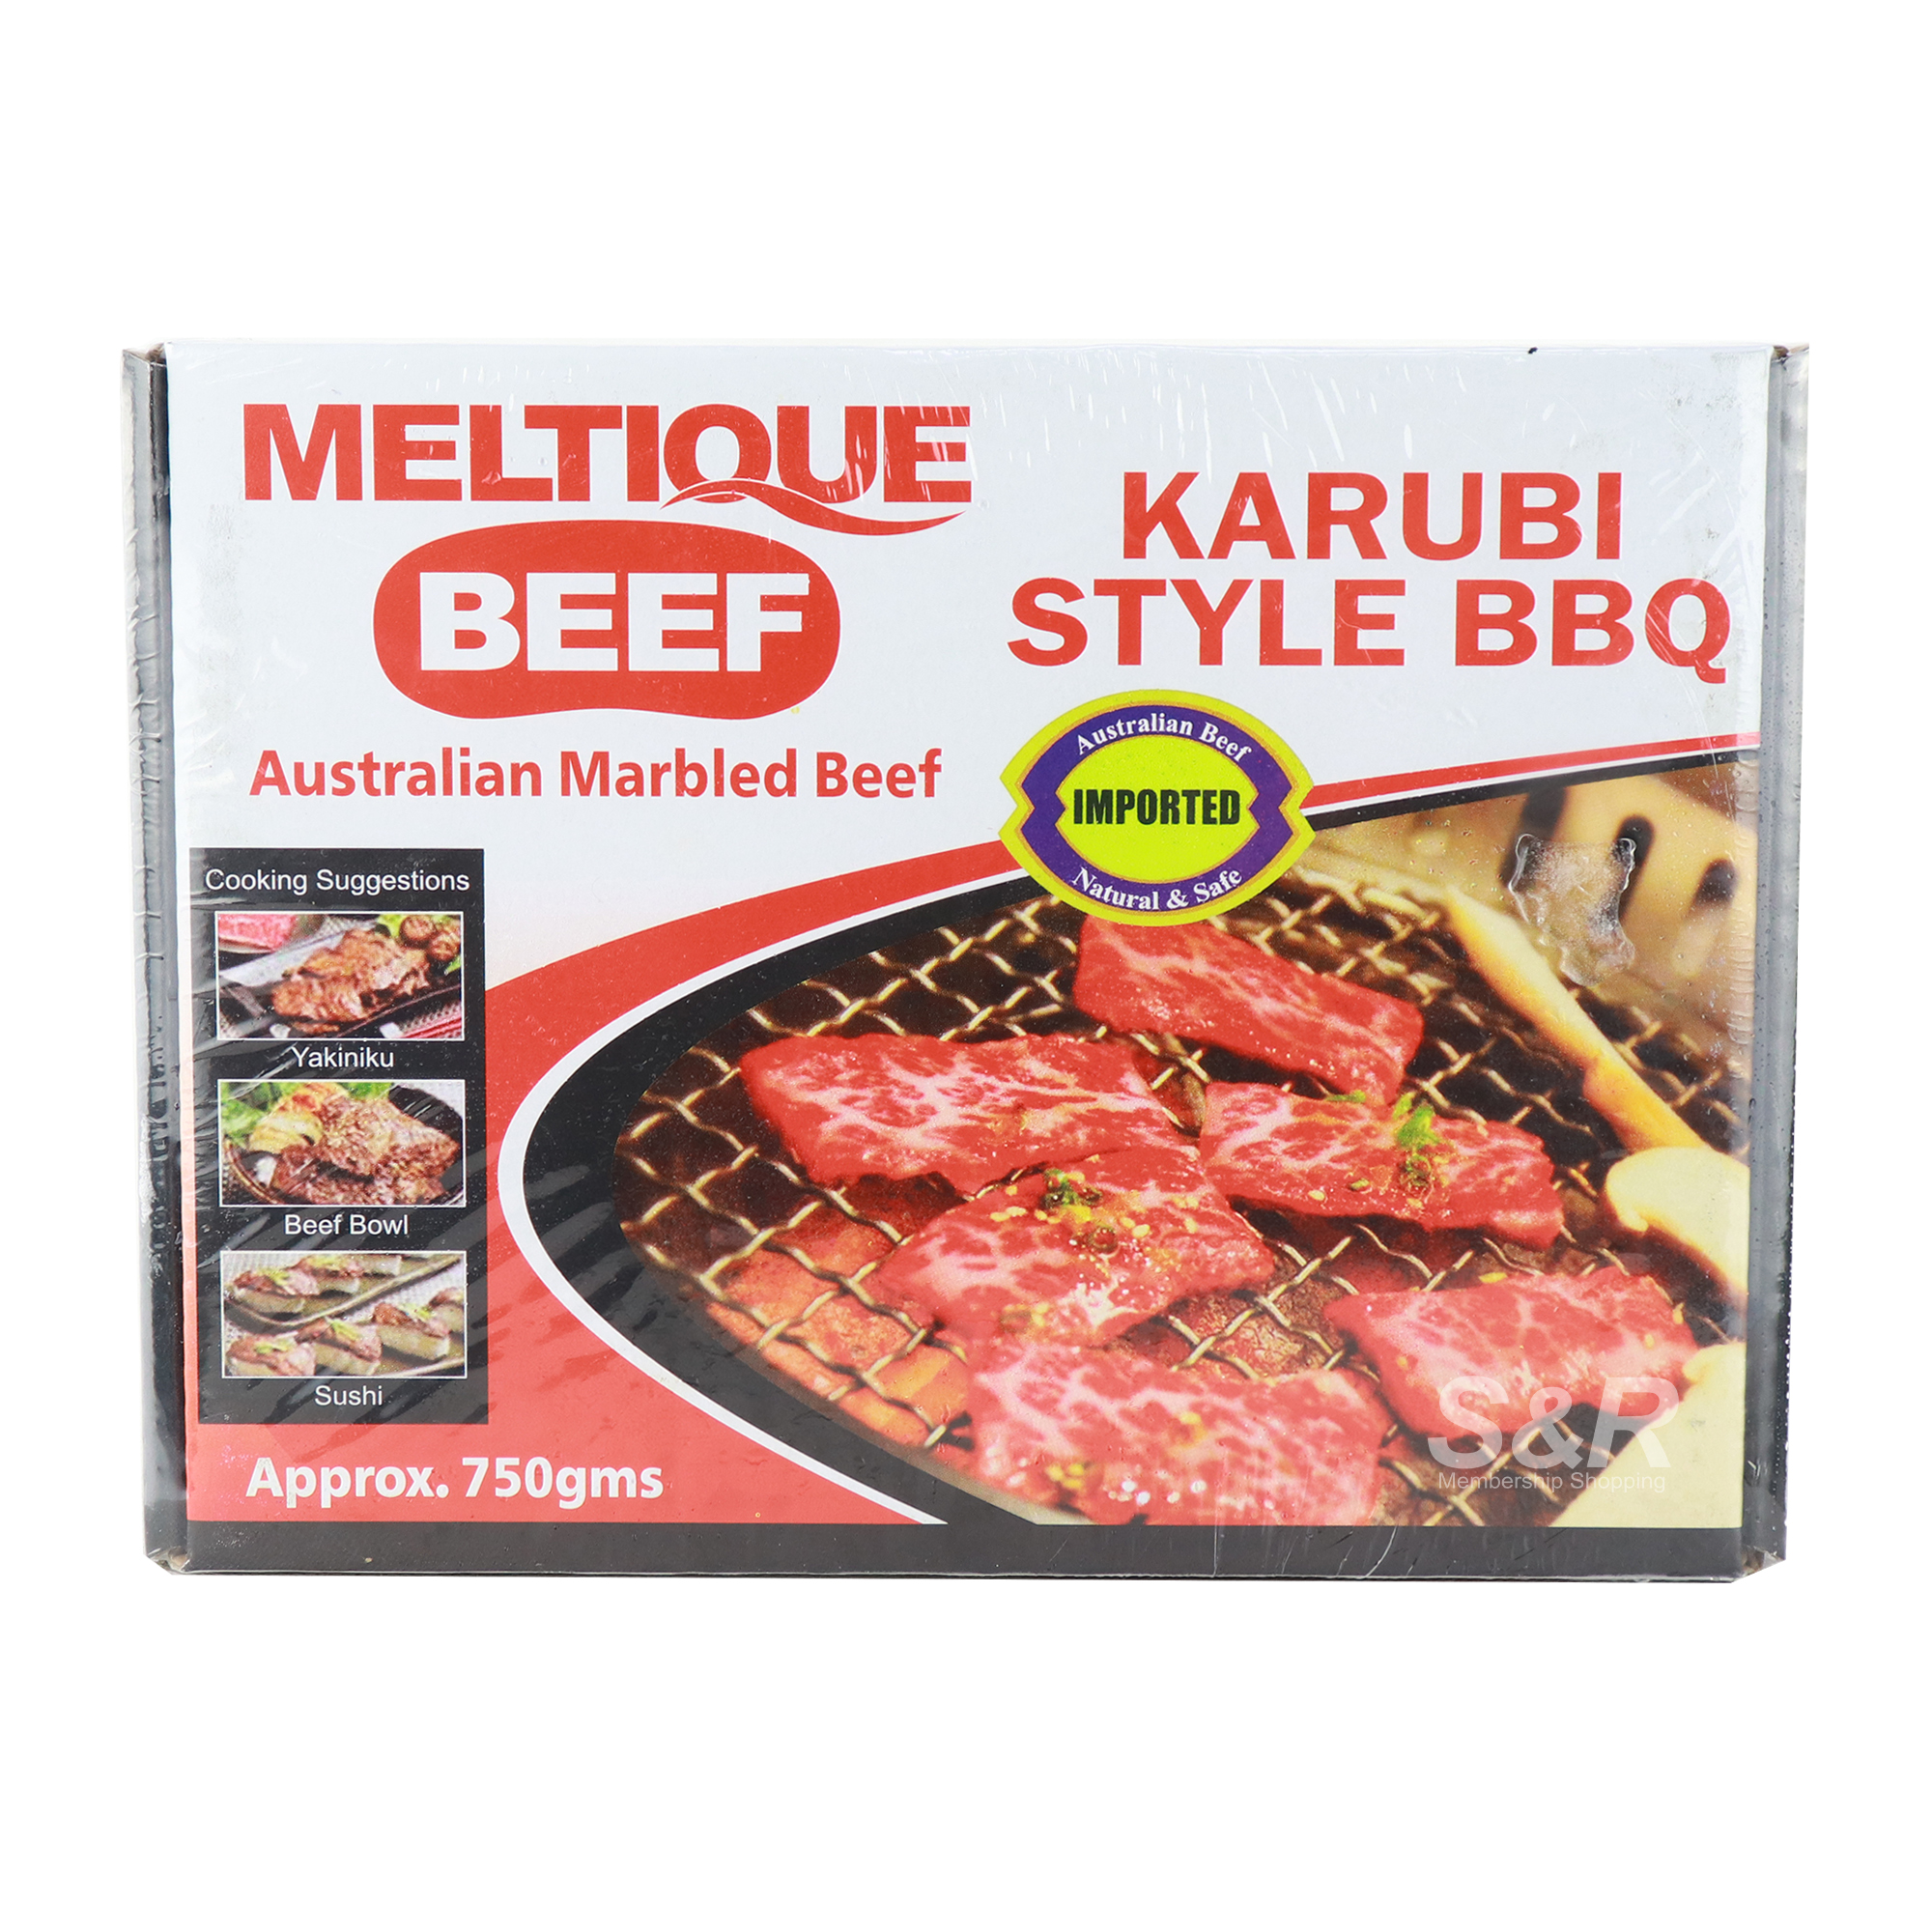 Meltique Beef Australian Marbled Beef Karubi Style BBQ 750g